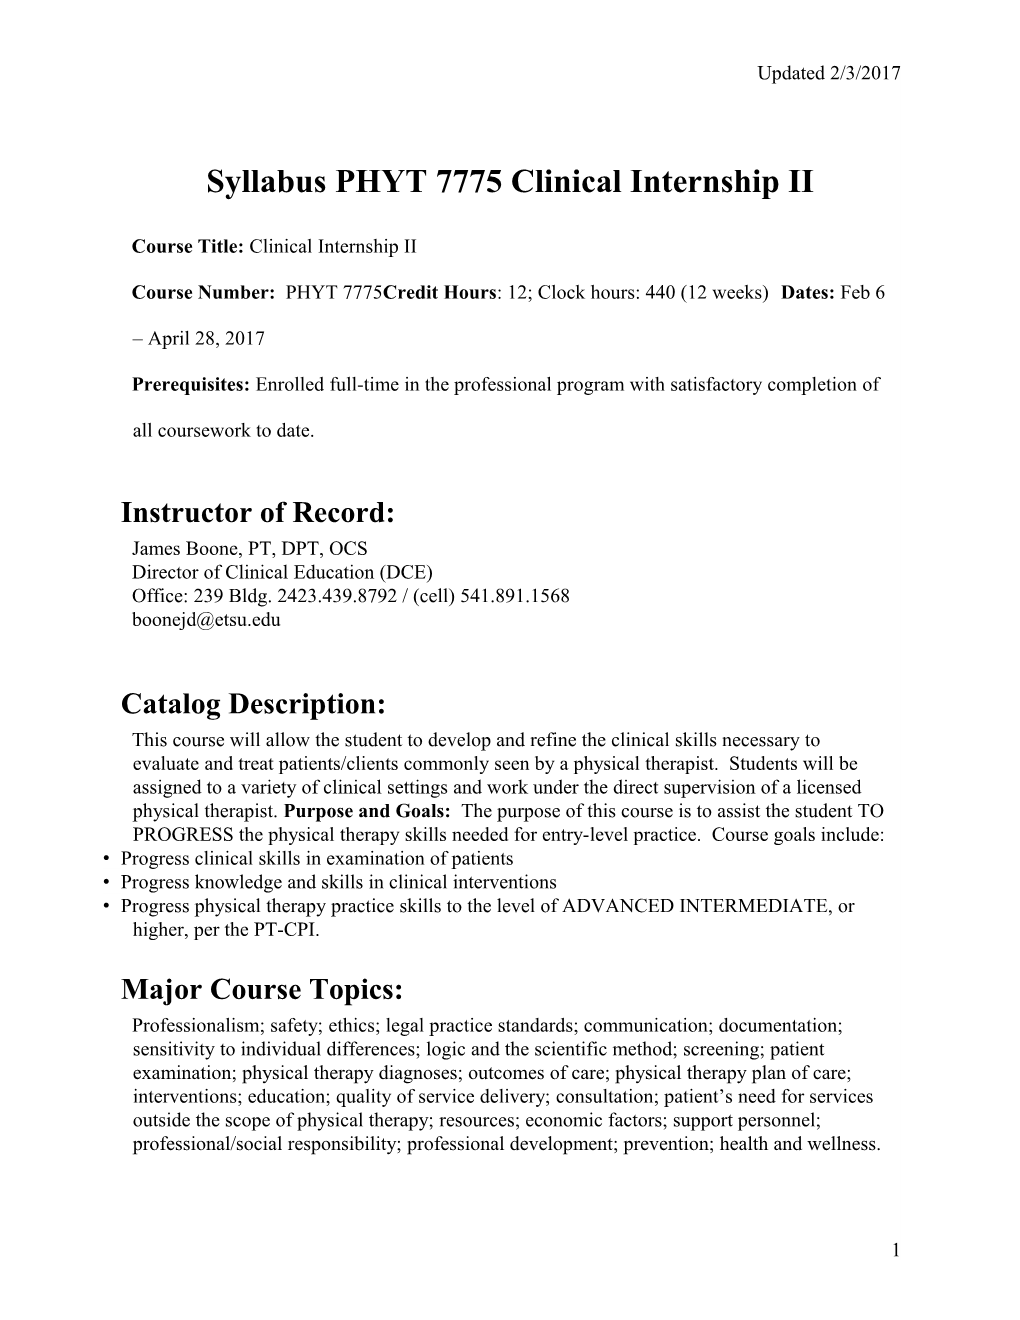 Syllabus PHYT 7775 Clinical Internship II